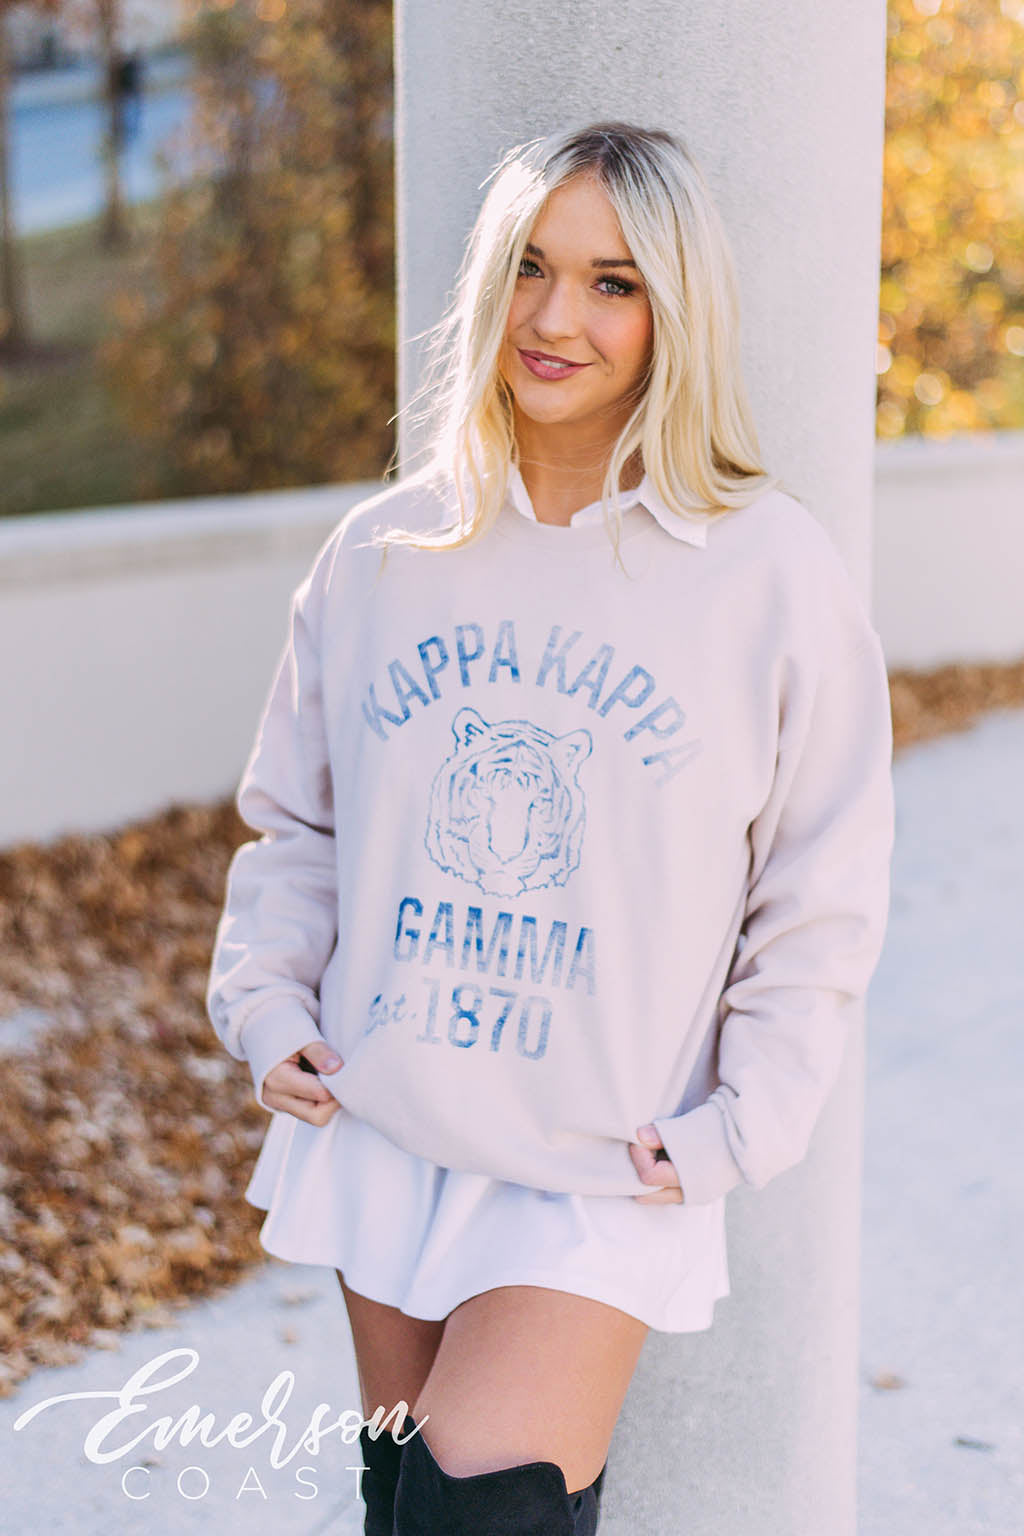 Kappa Kappa Gamma Vintage Collegiate Sweatshirt - Emerson Coast